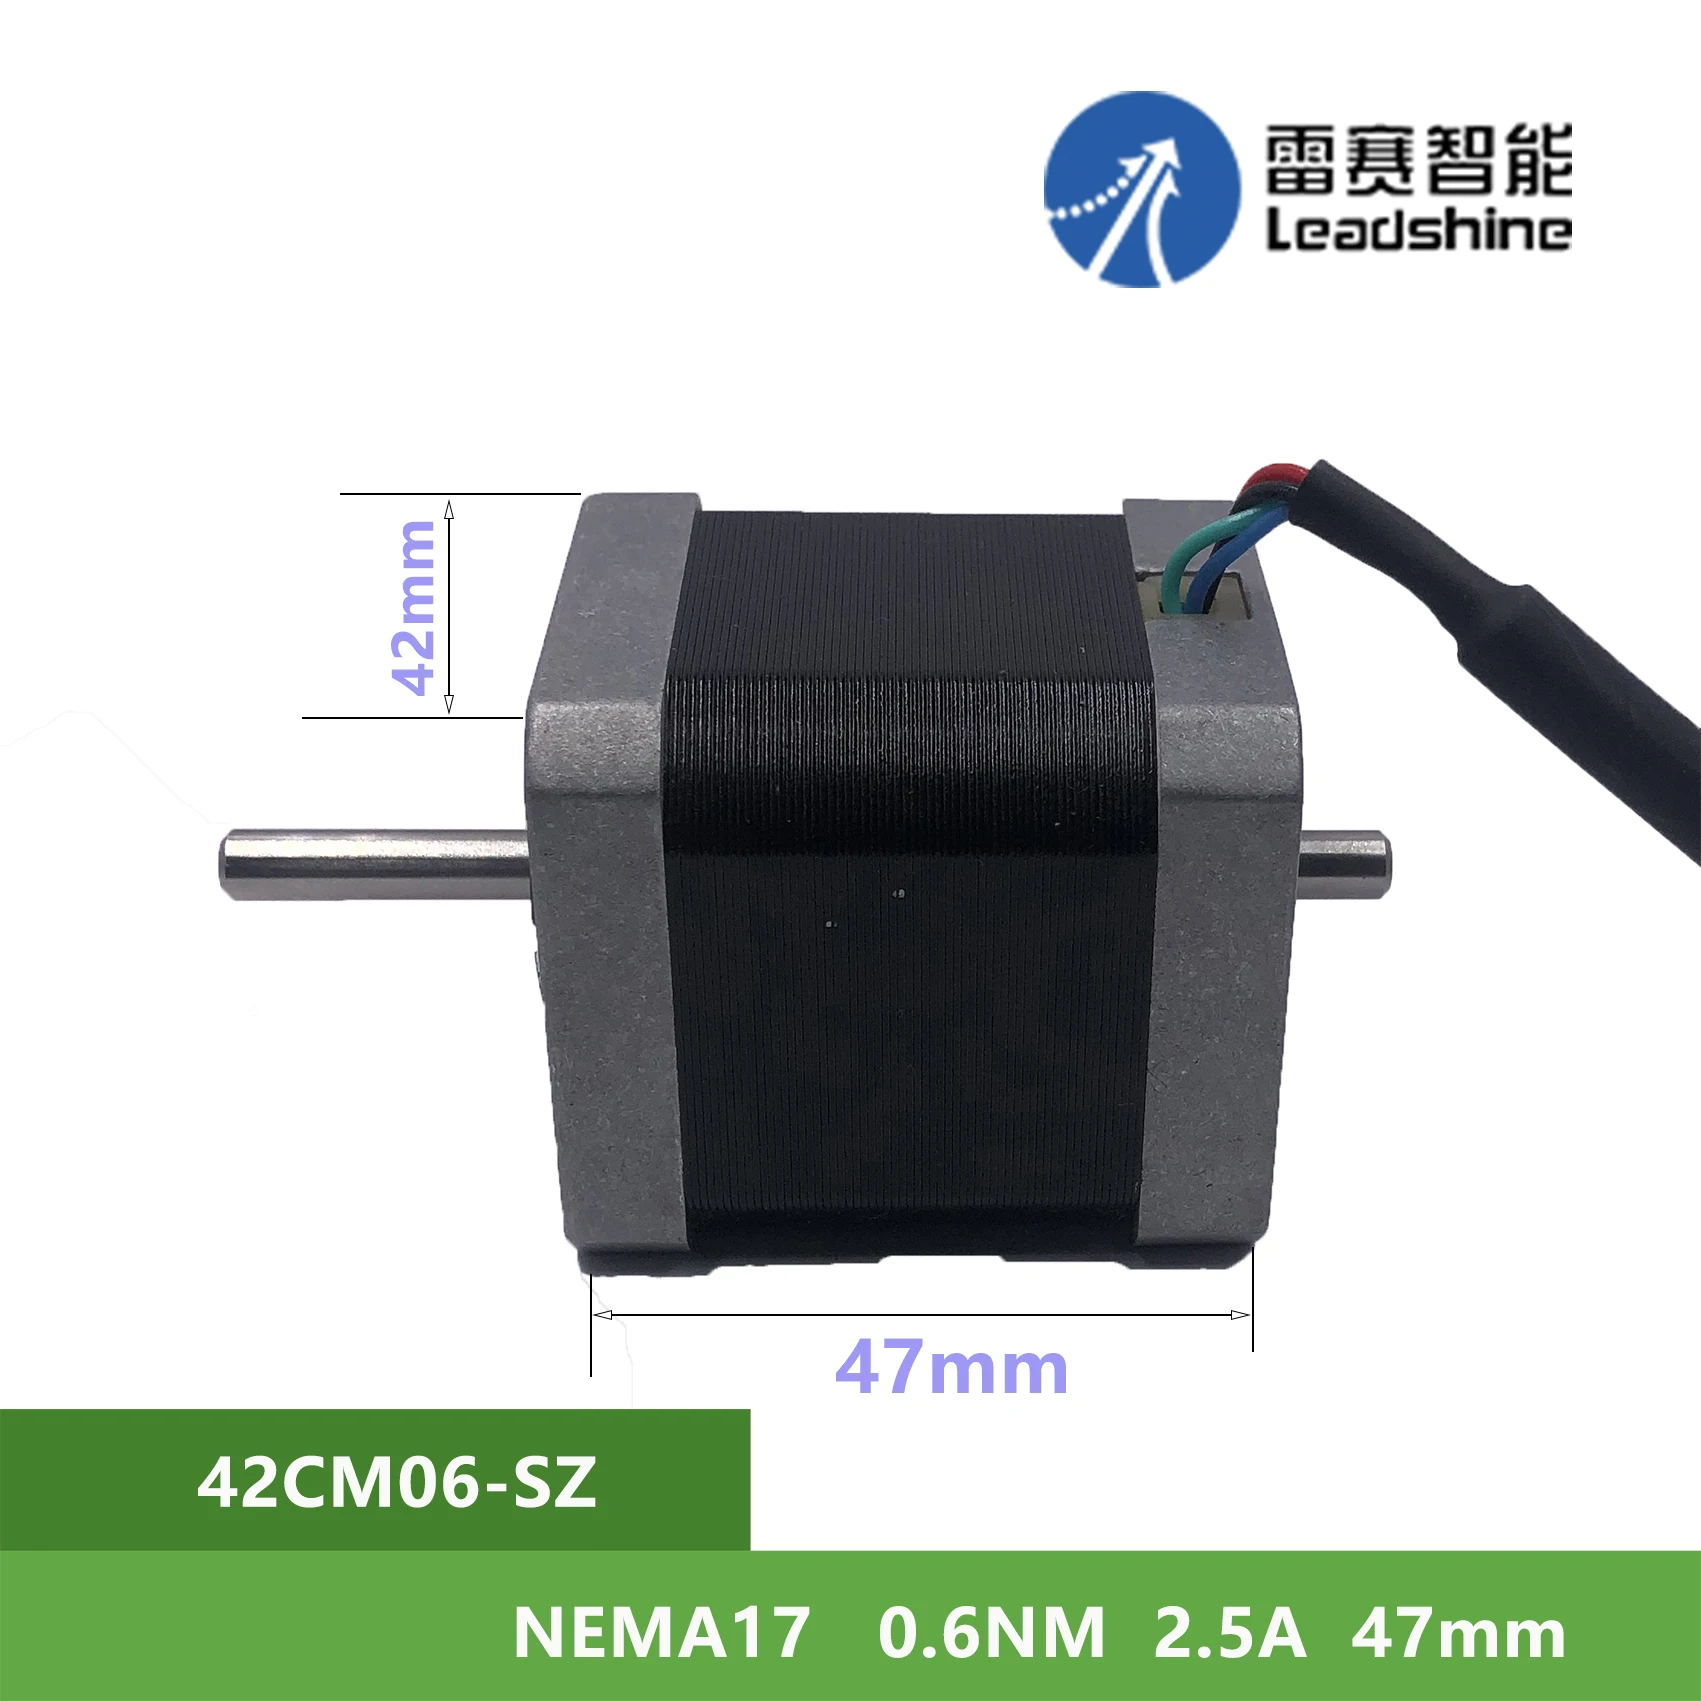 

NEMA12 Leadshine 42CM06-SZ 0.6m 2.5A 2 phase Stepper Motor Shaft Diameter 5mm